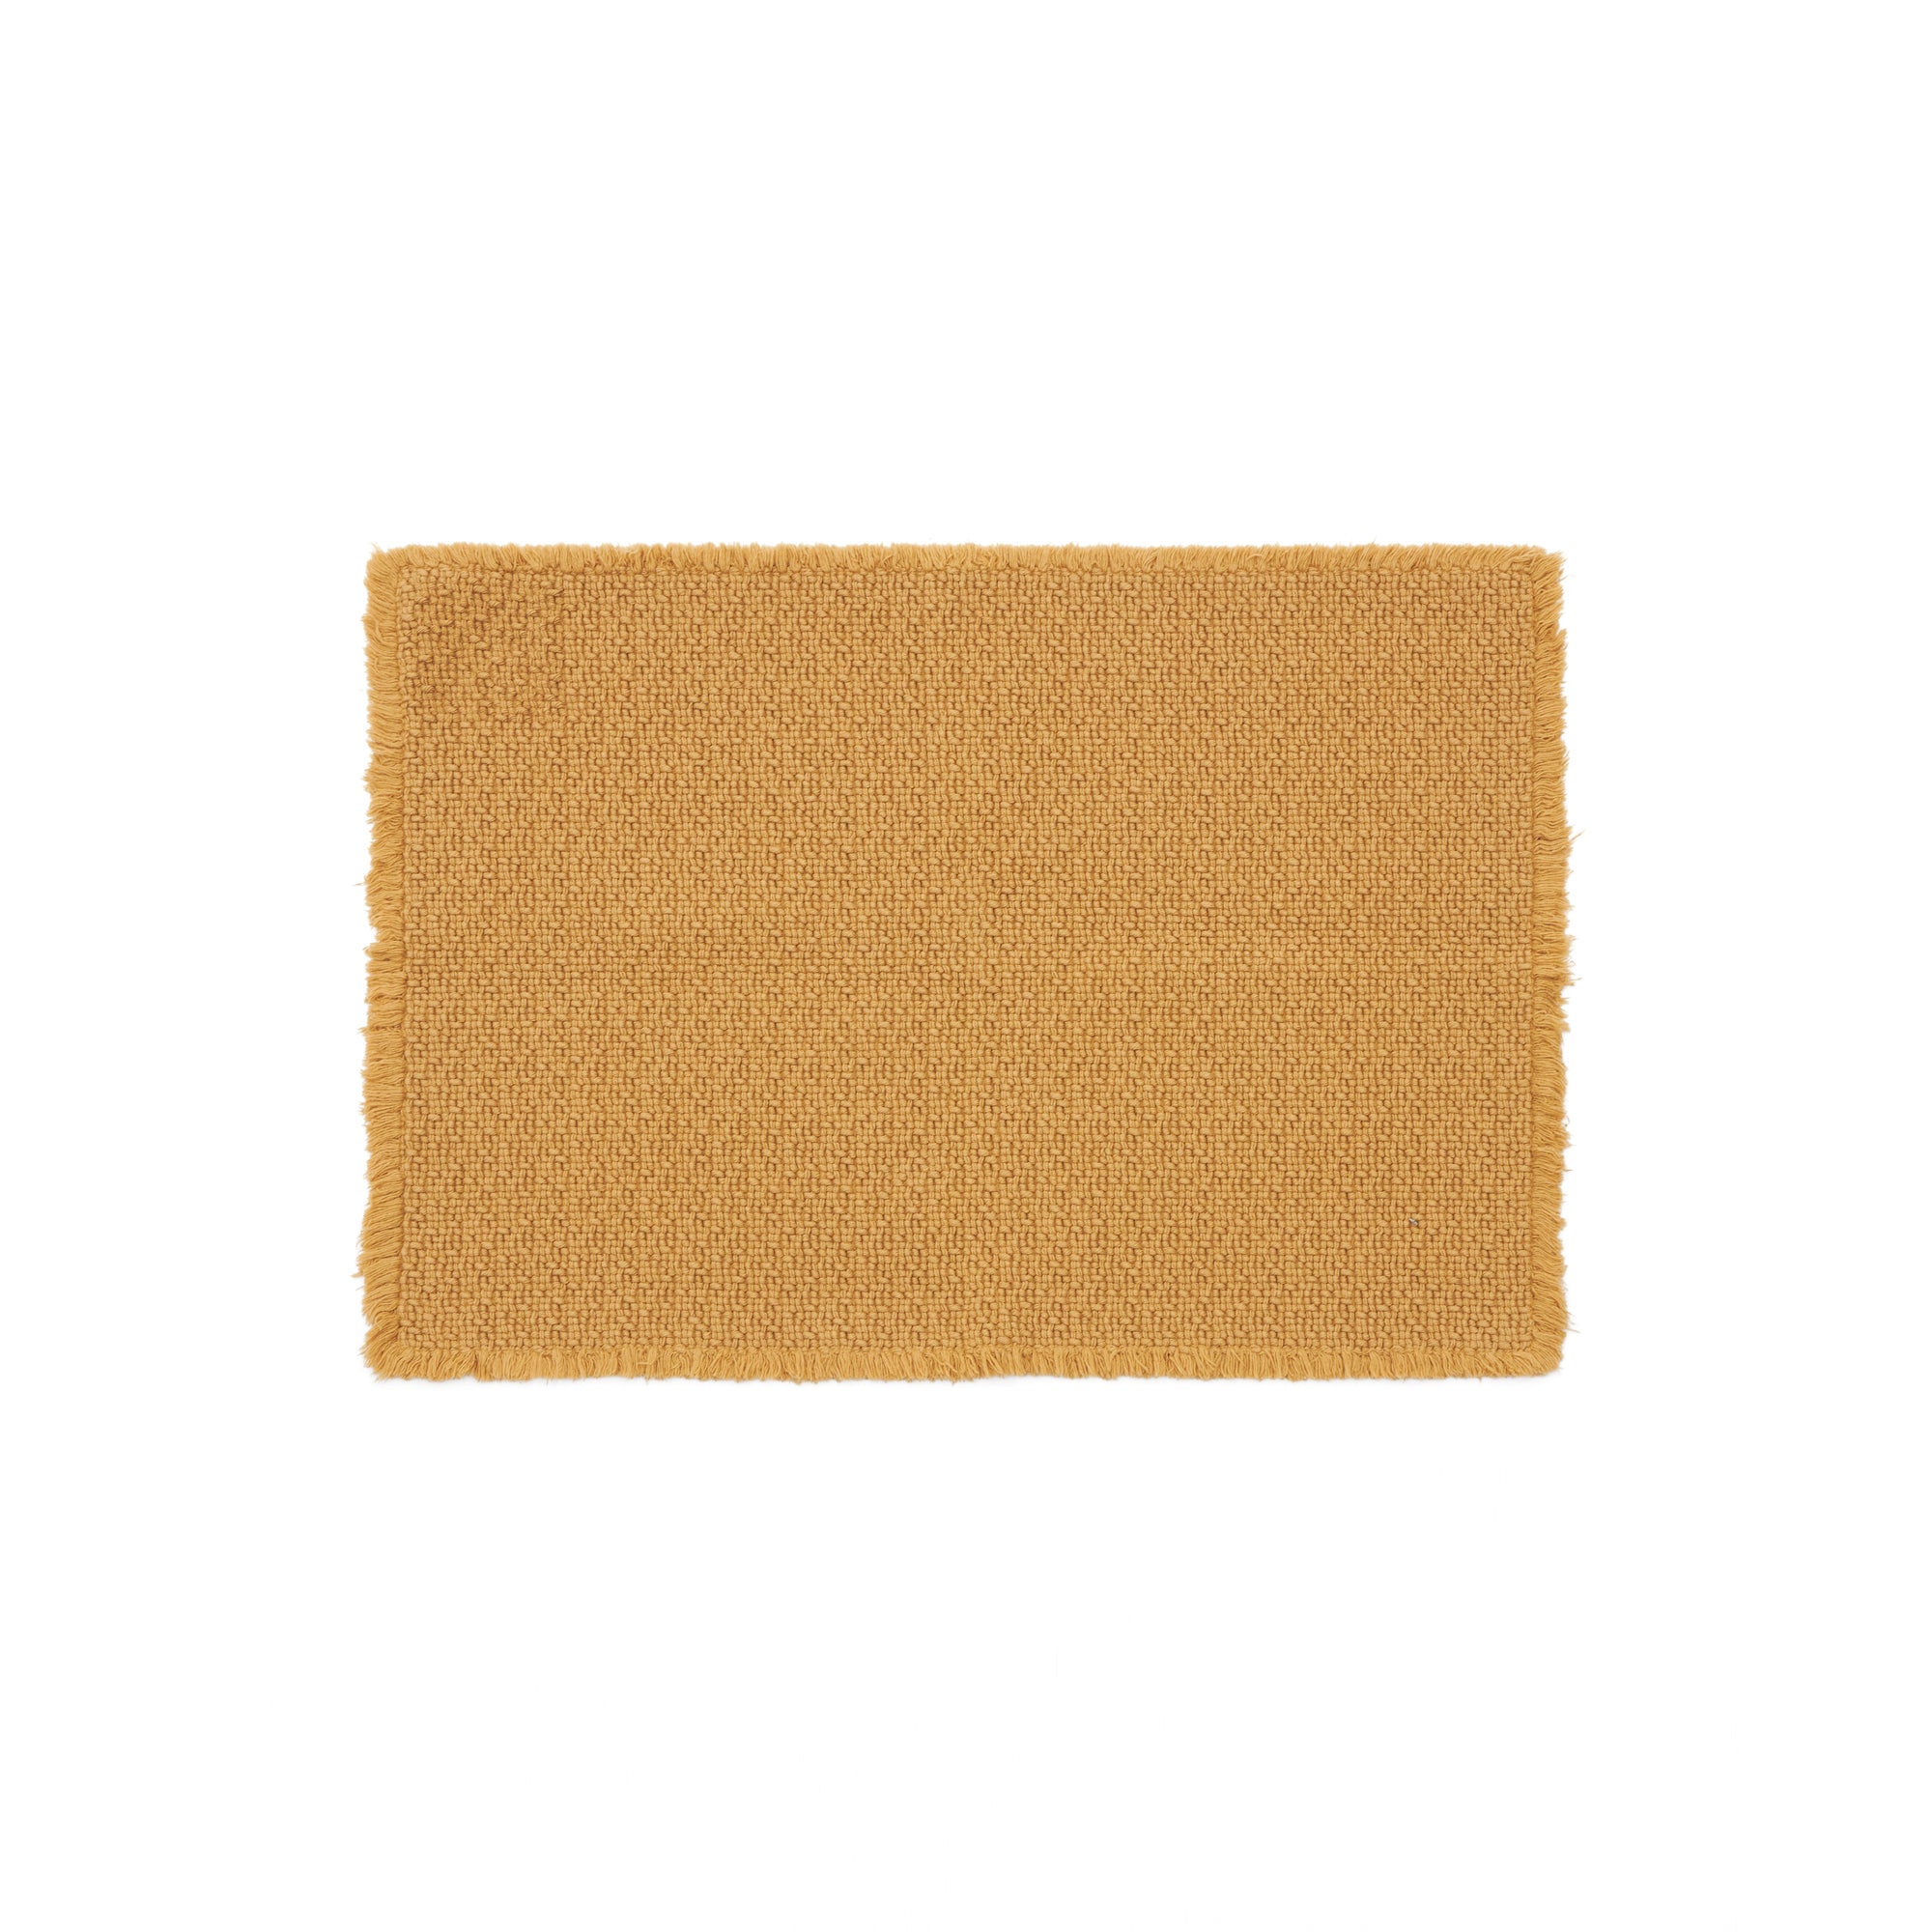 Minet 100% cotton bath mat in mustard, 50 x 70 cm